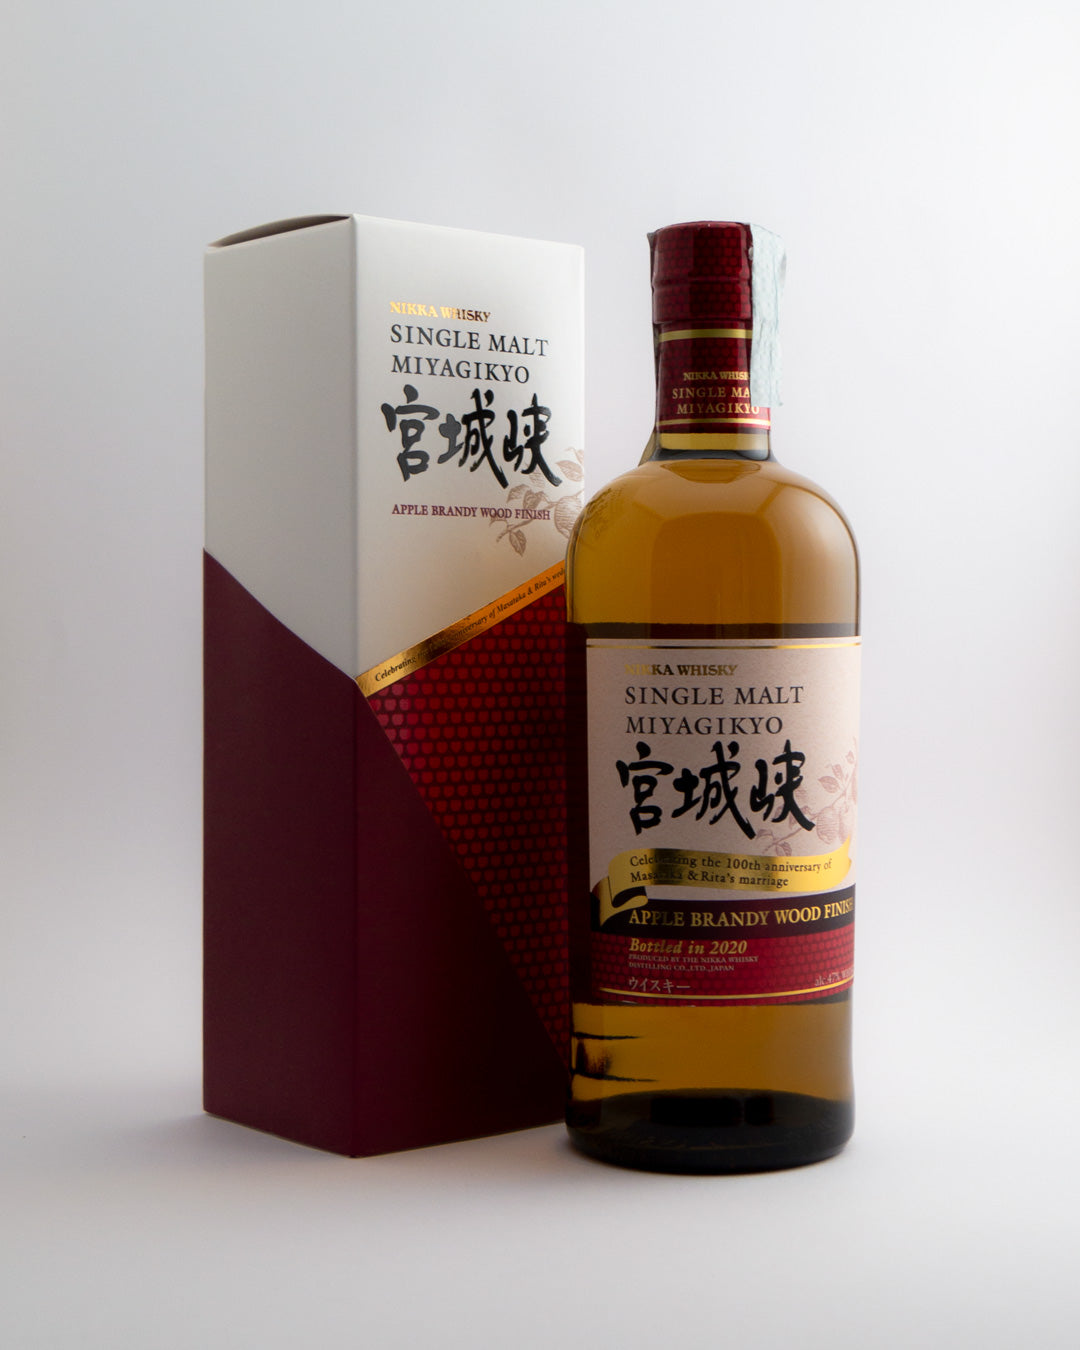 Whisky Miyagikyo Apple Brandy Wood Finish